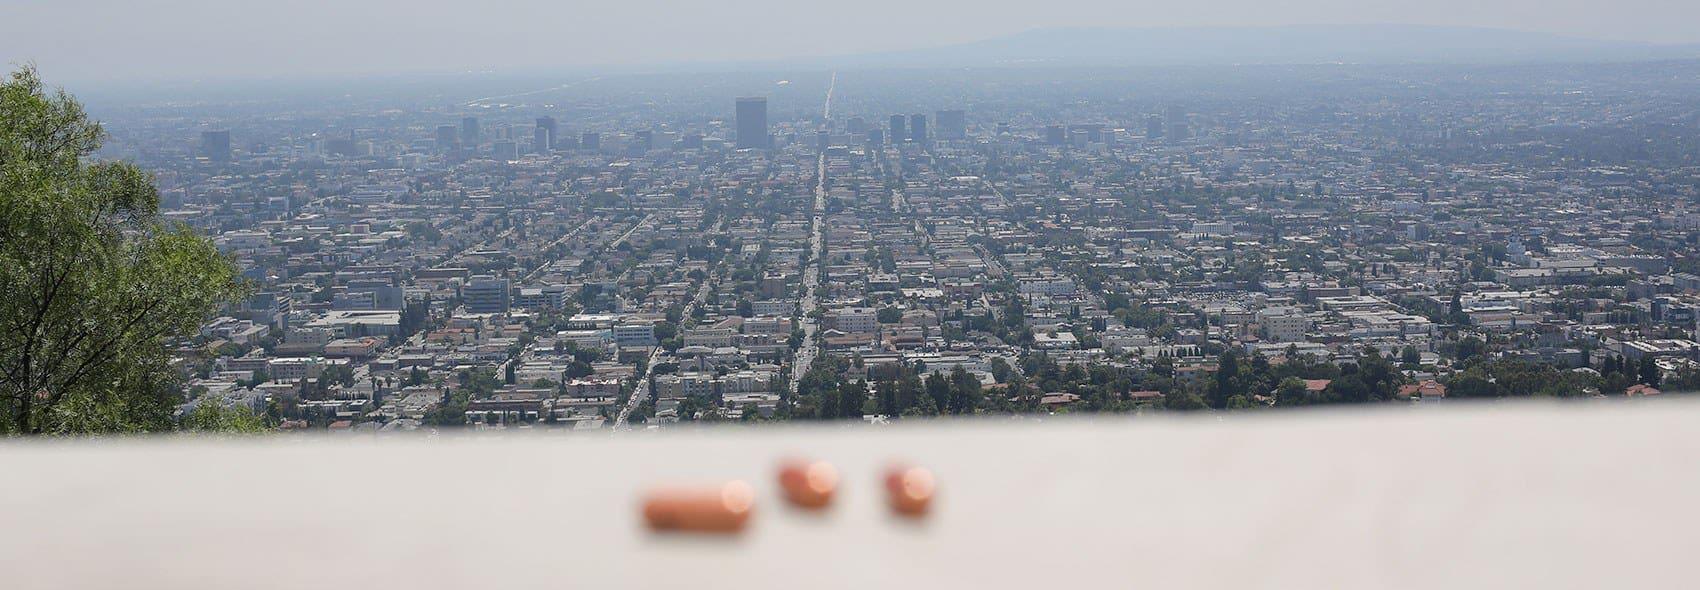 Vitamin d pills on balcony city landscape